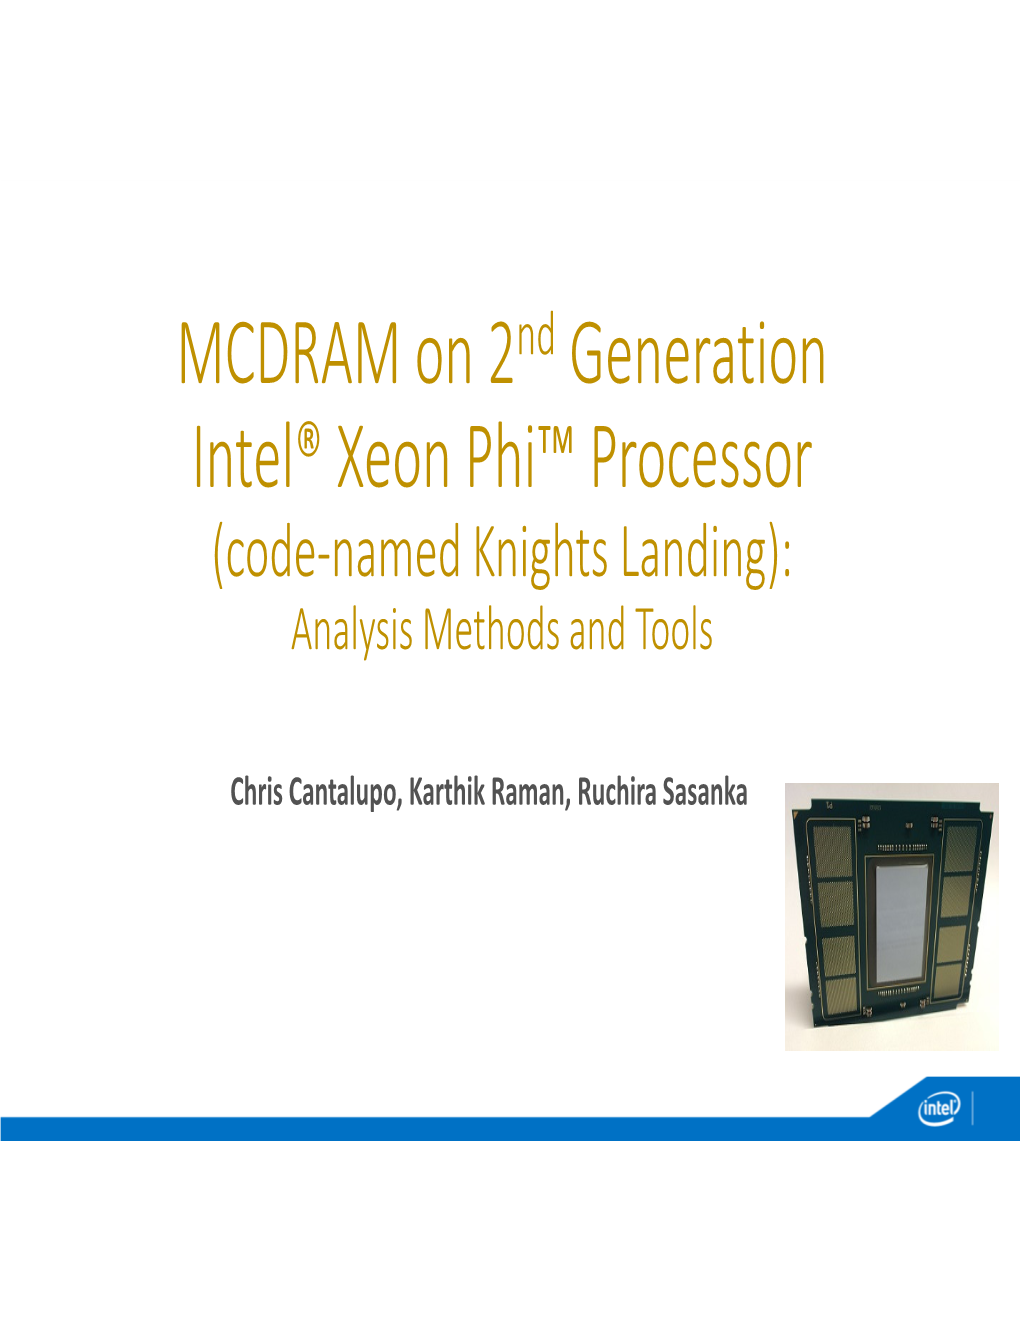 MCDRAM on 2 Generation Intel® Xeon Phi™ Processor